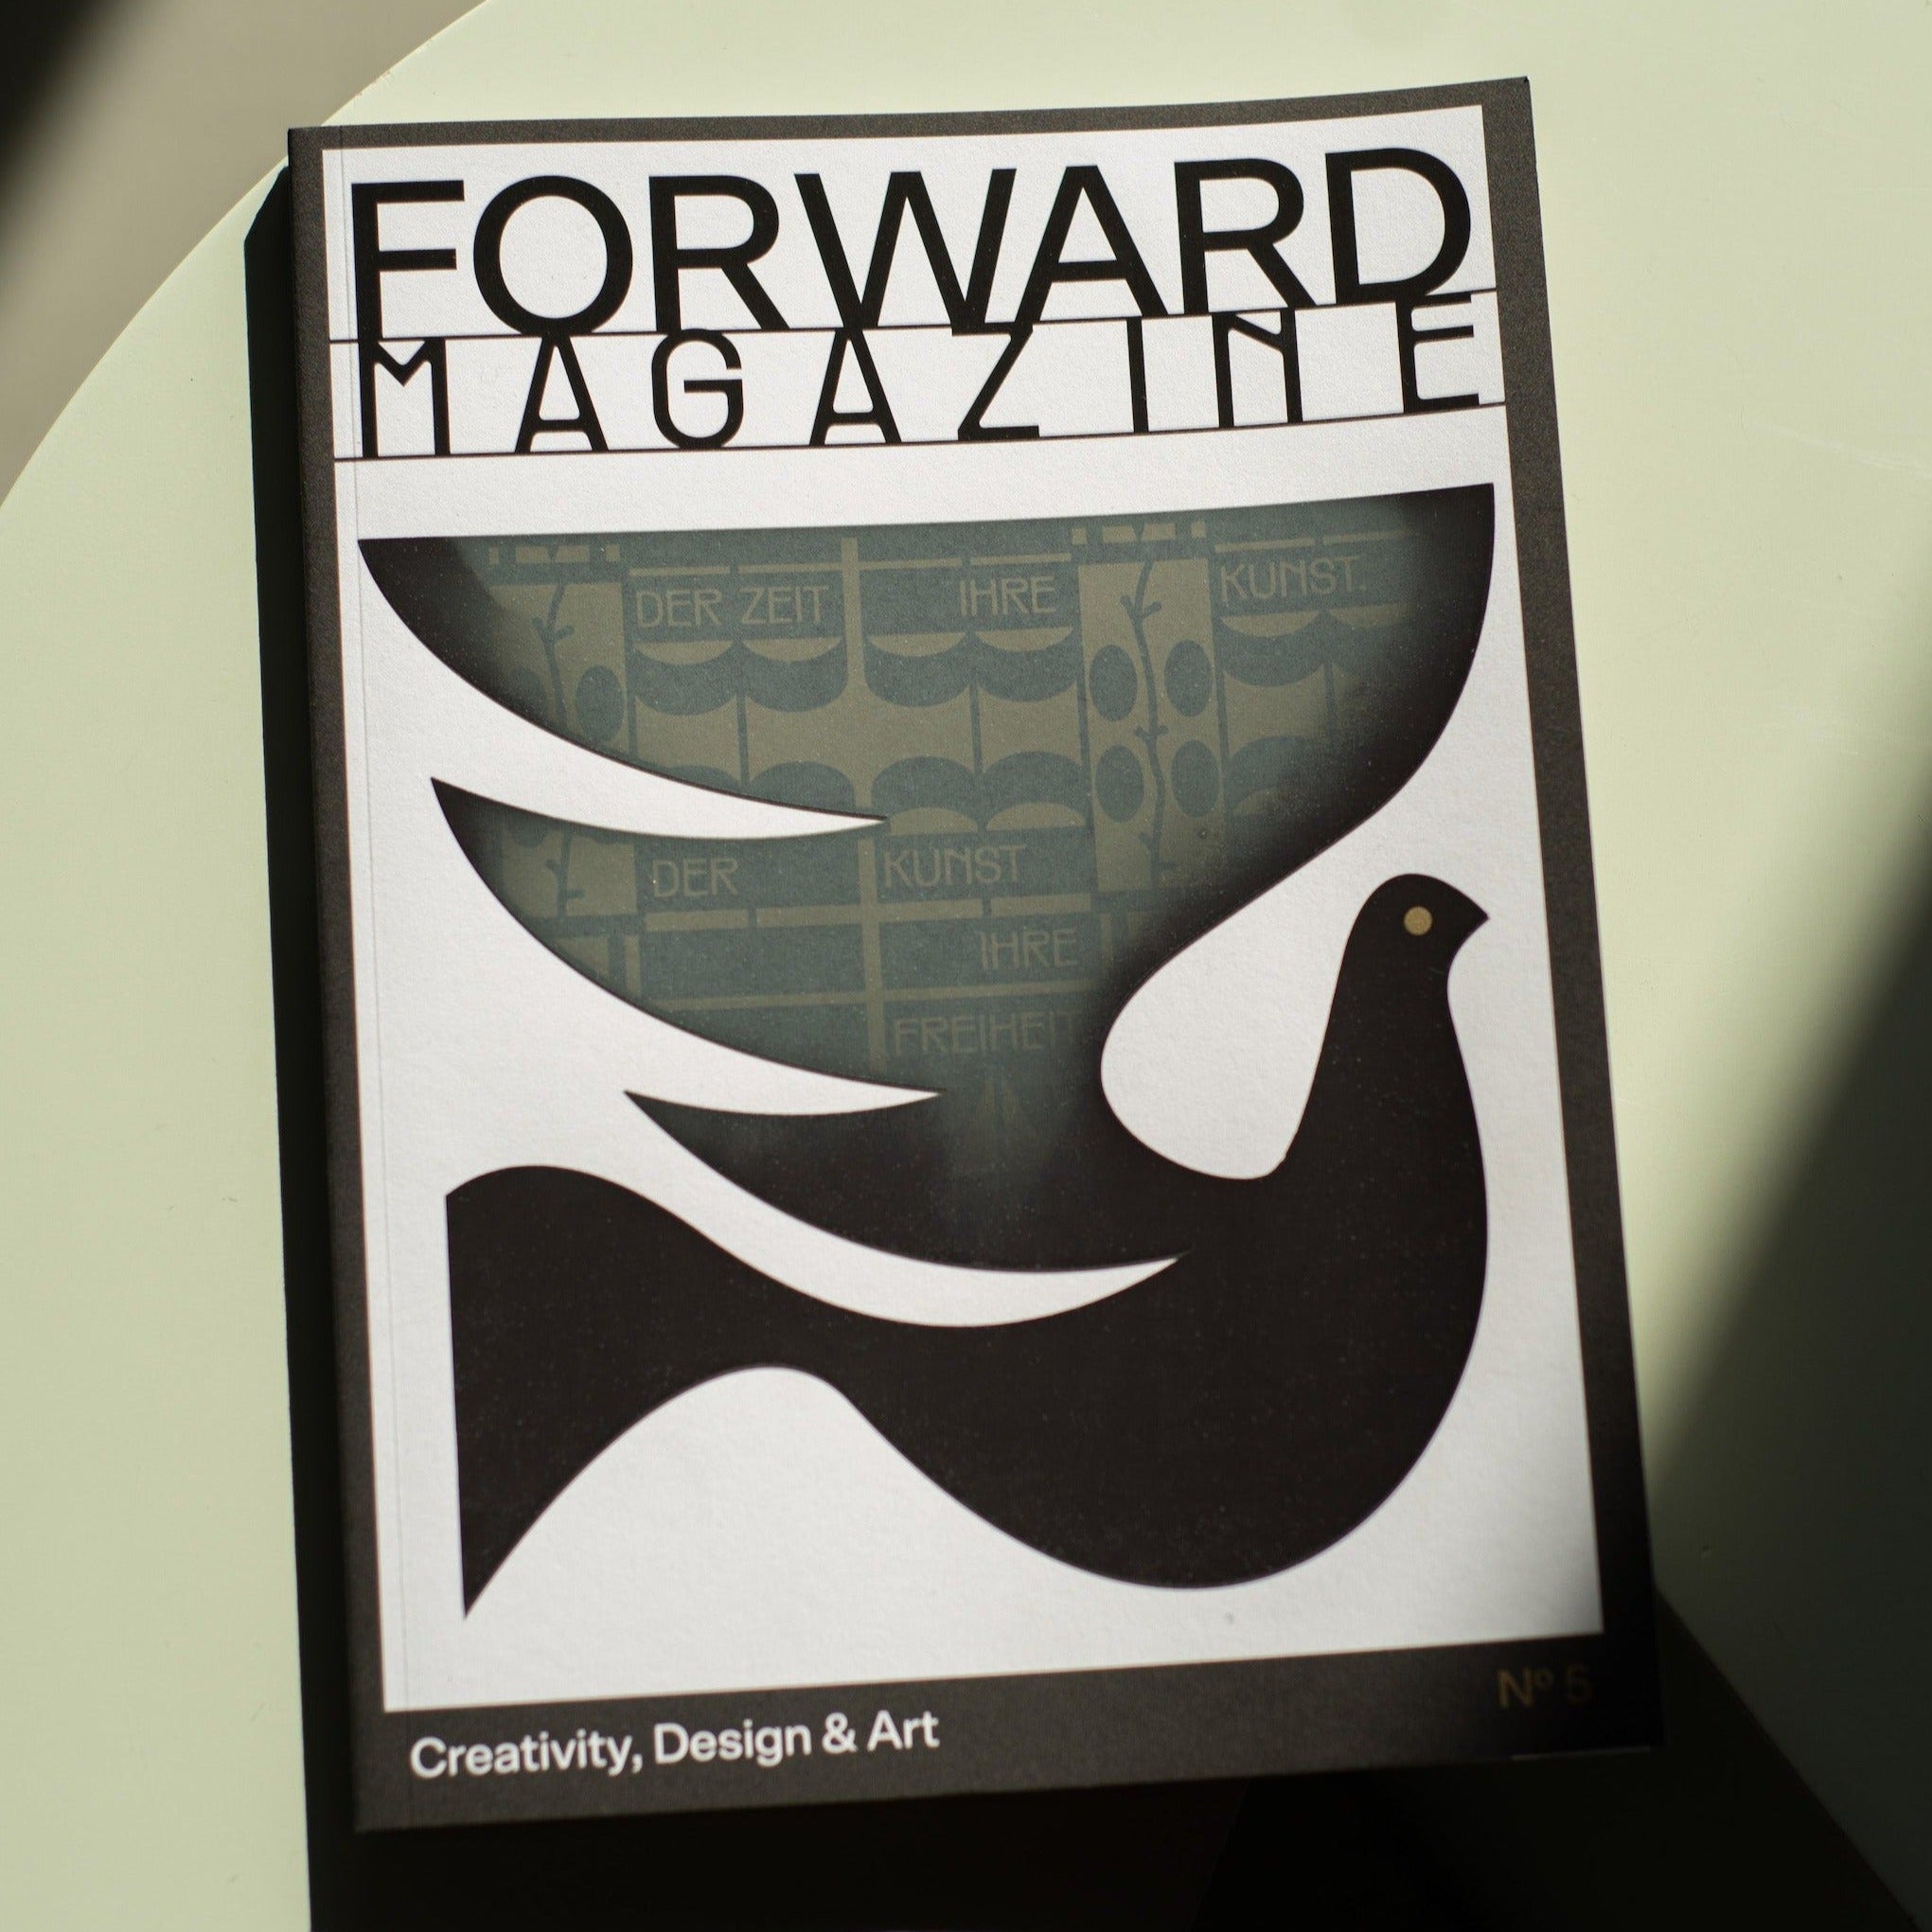 Forward Magazine Issue No. 5 - “To each era its art. To art its freedom.”